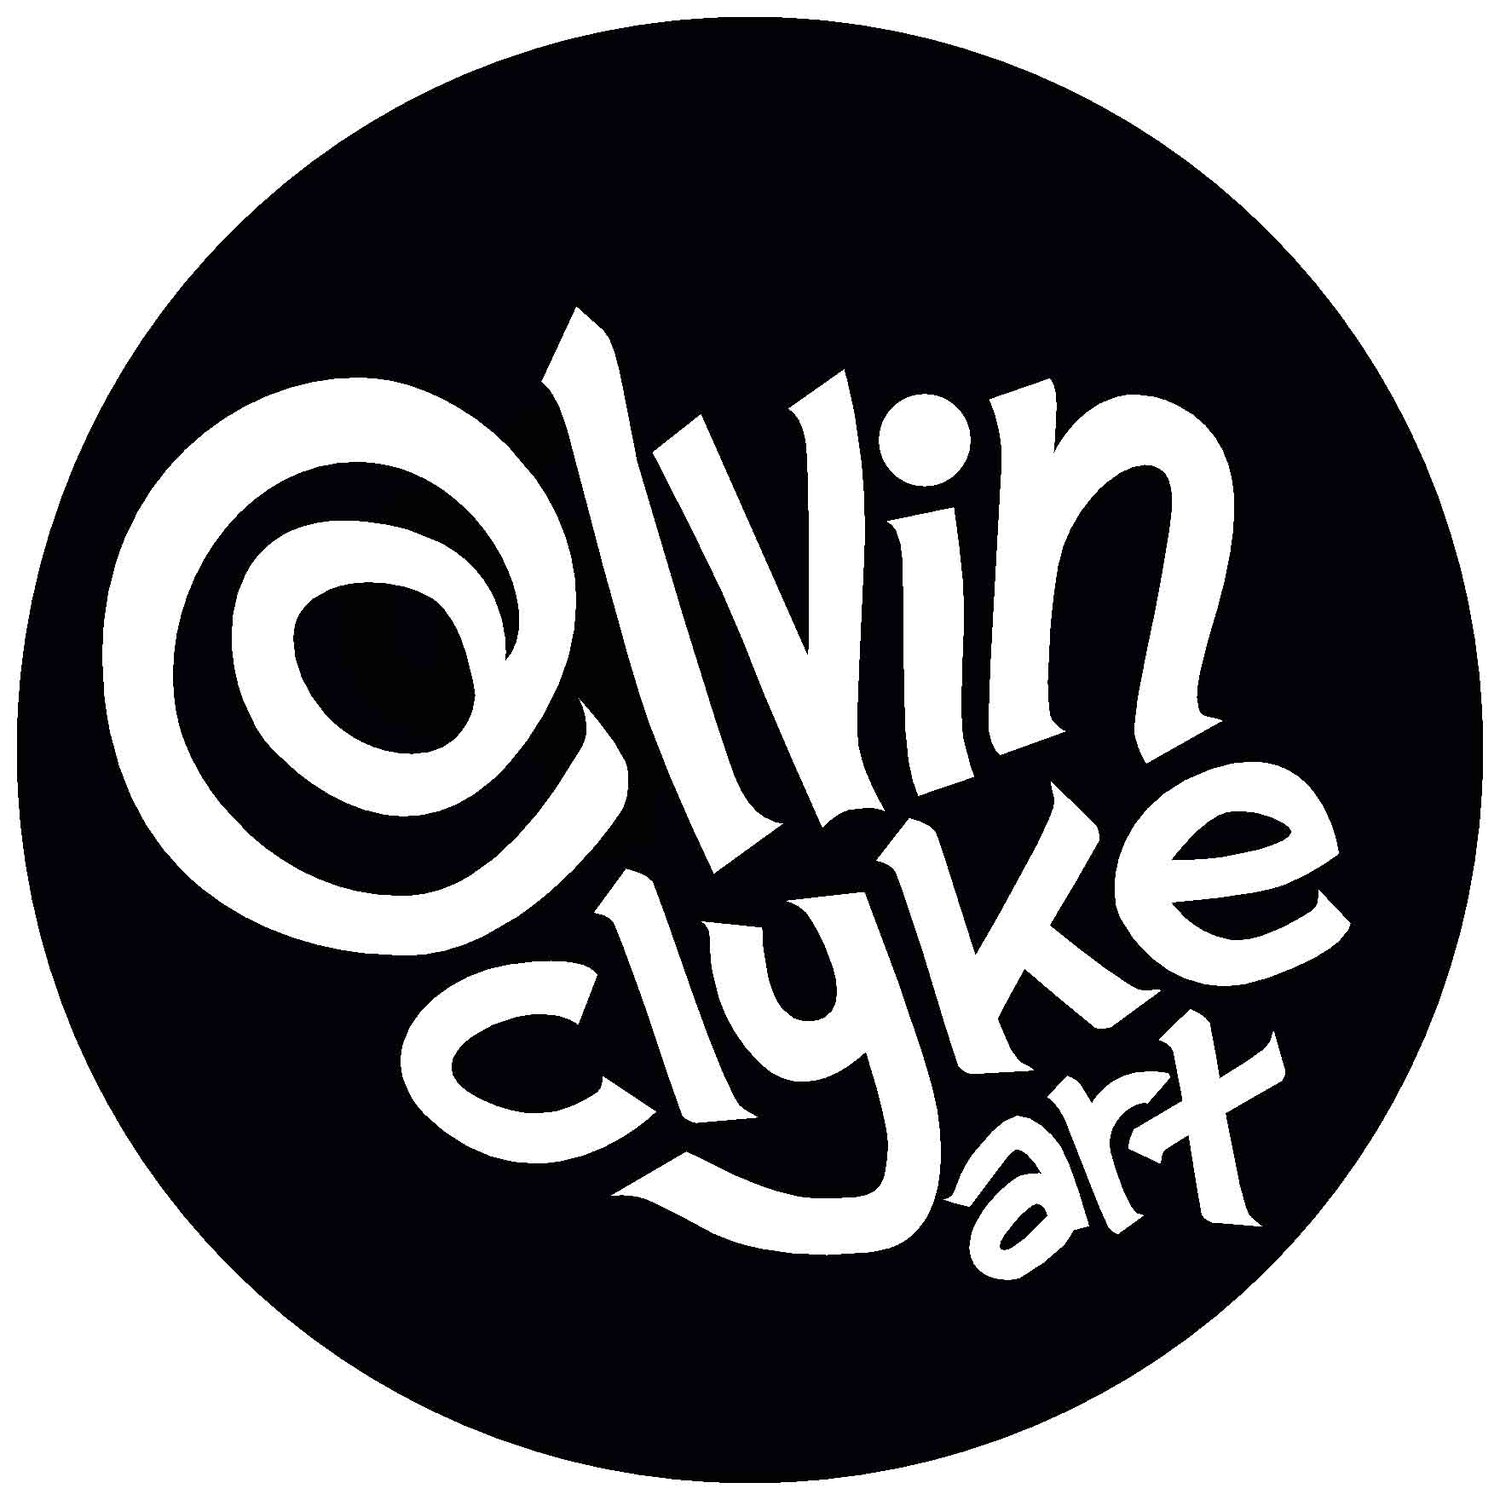 The Portfolio of Calvin Clyke